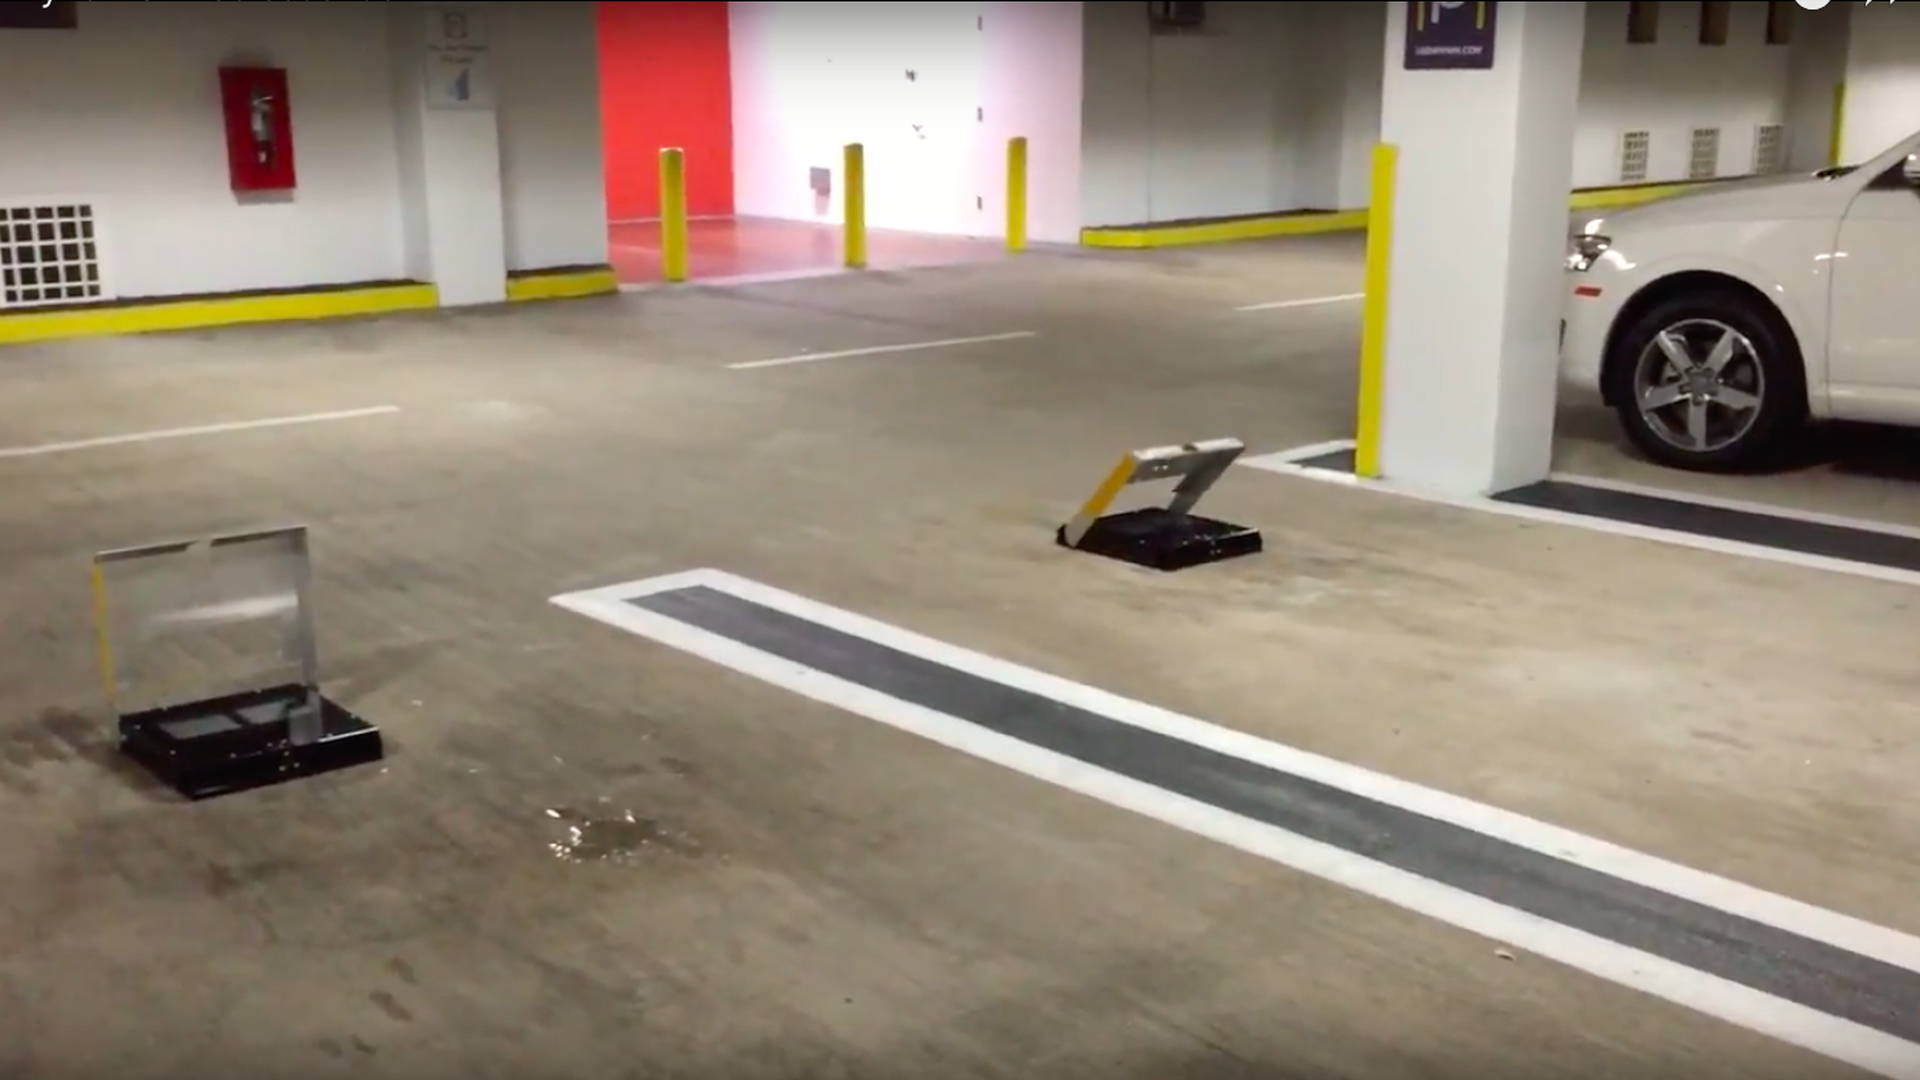 Robot parking